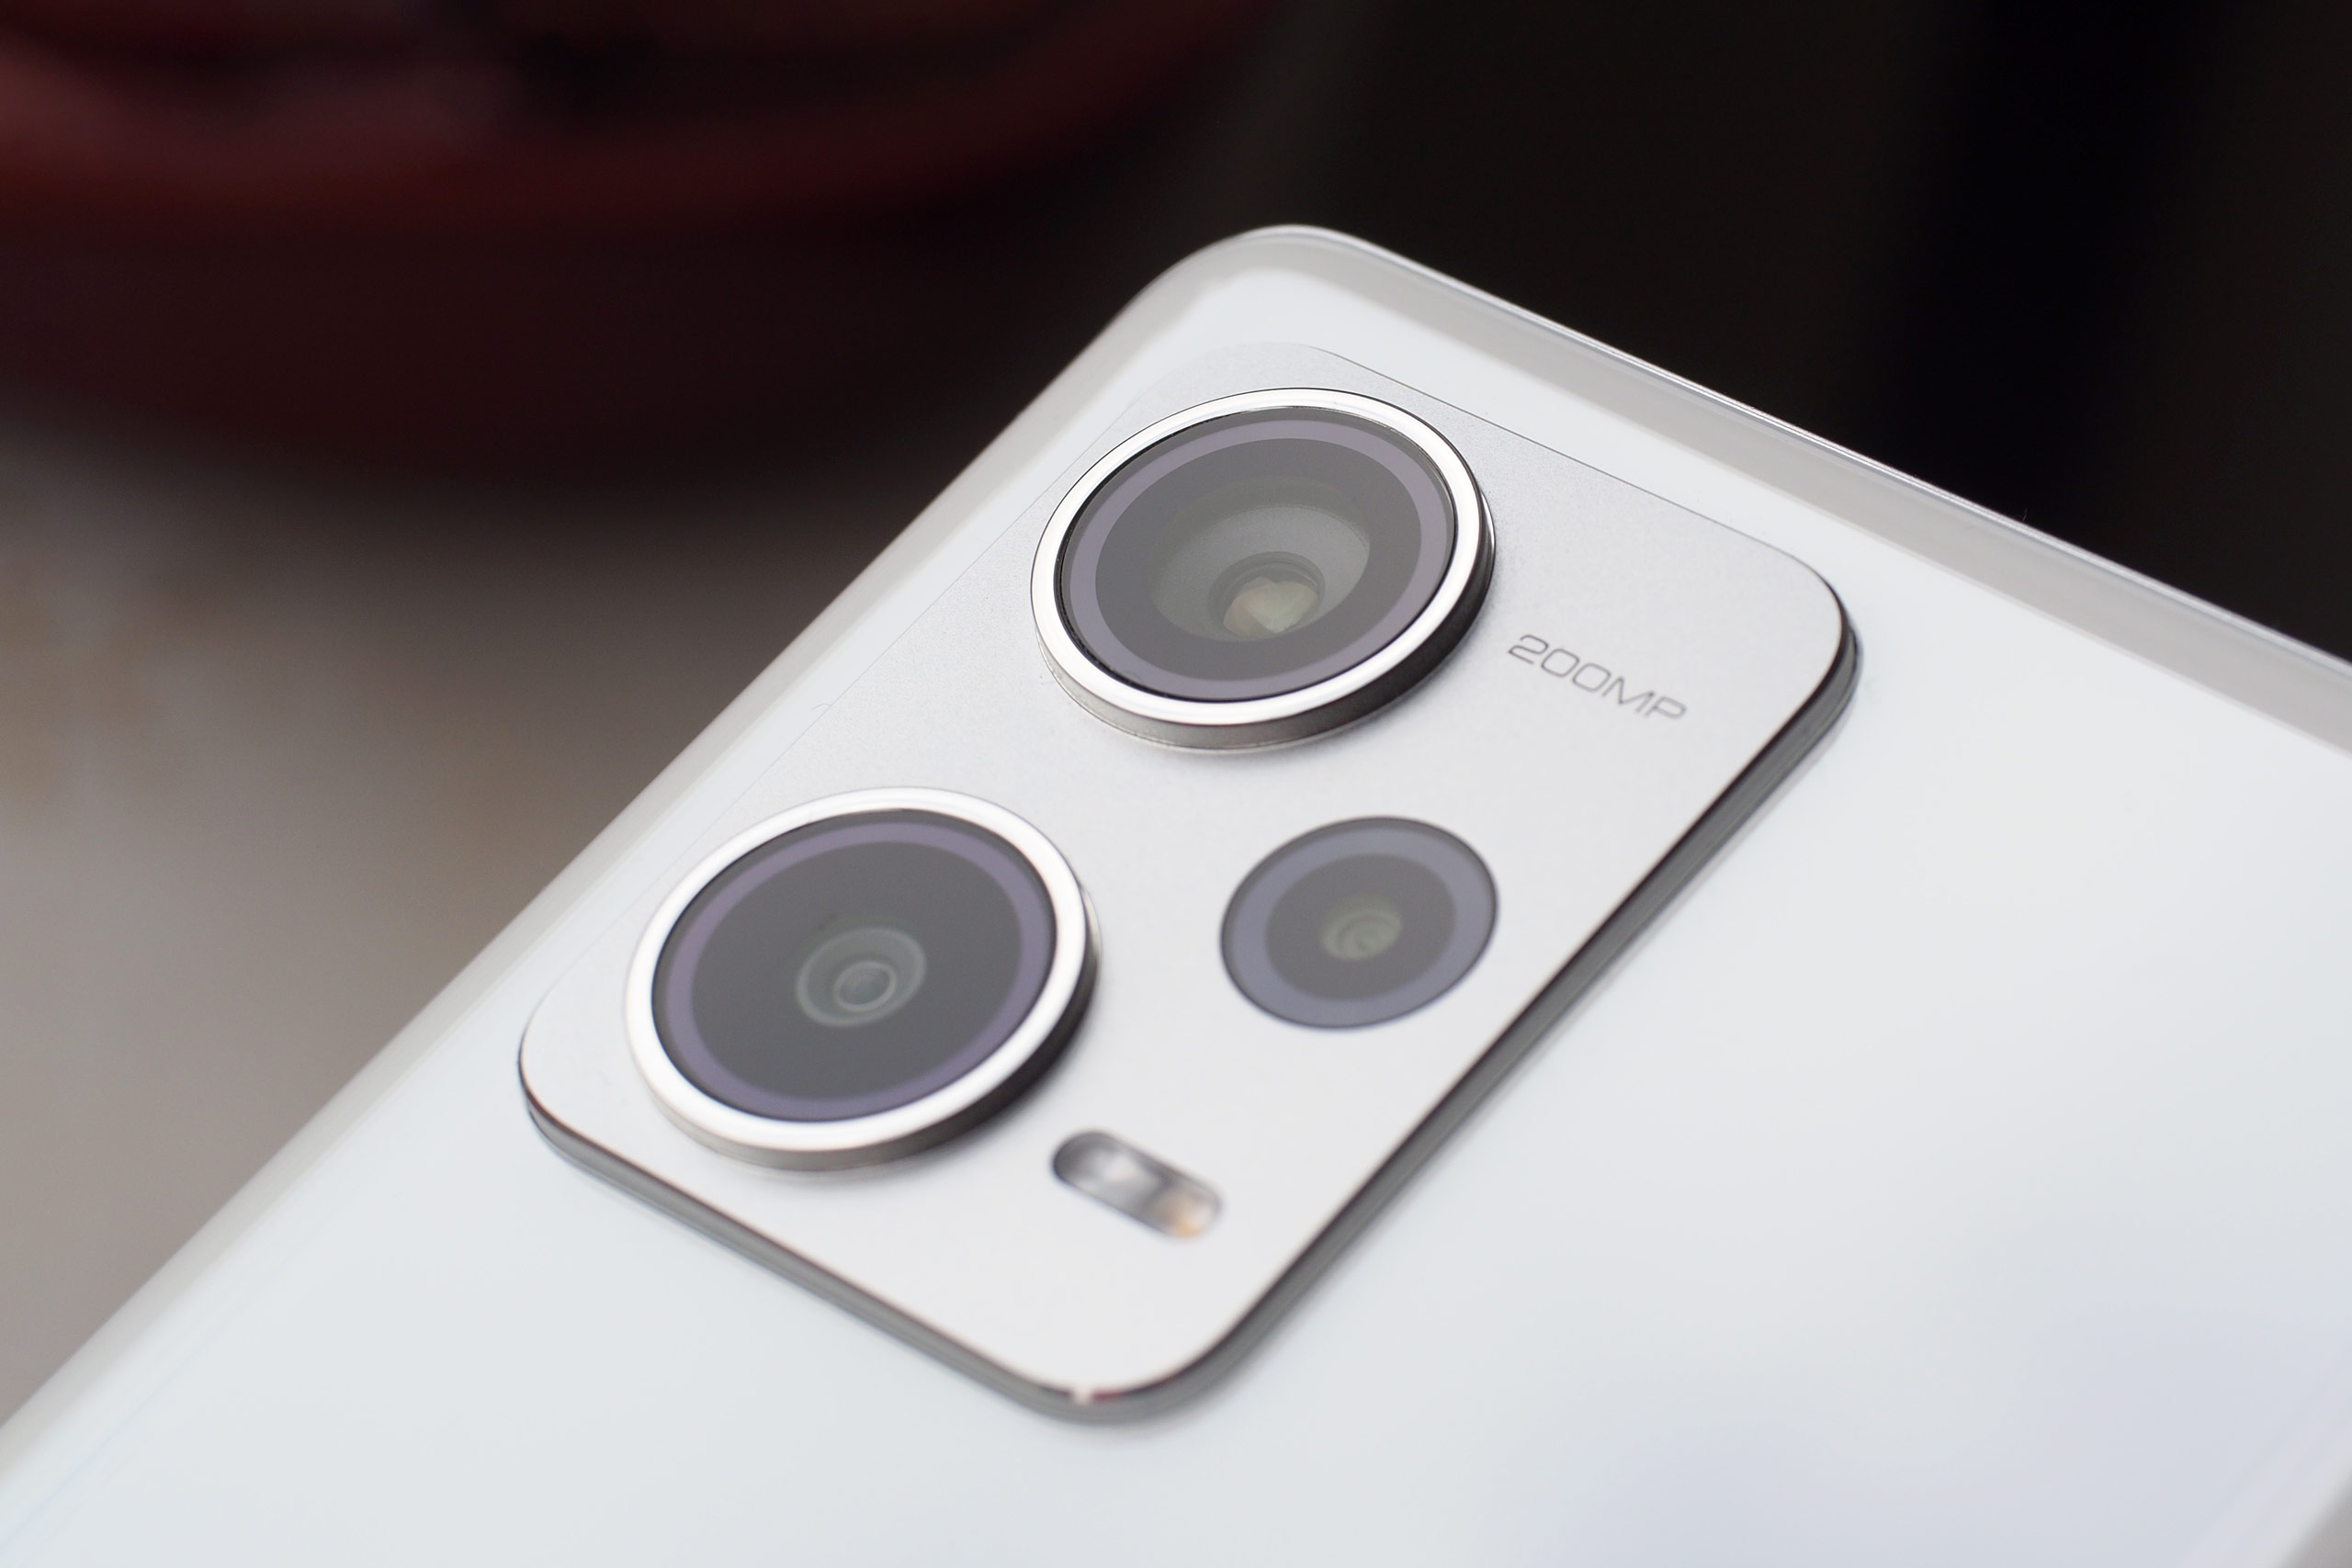 Xiaomi Redmi Note 12 Pro+ - What can the 200-megapixel camera do